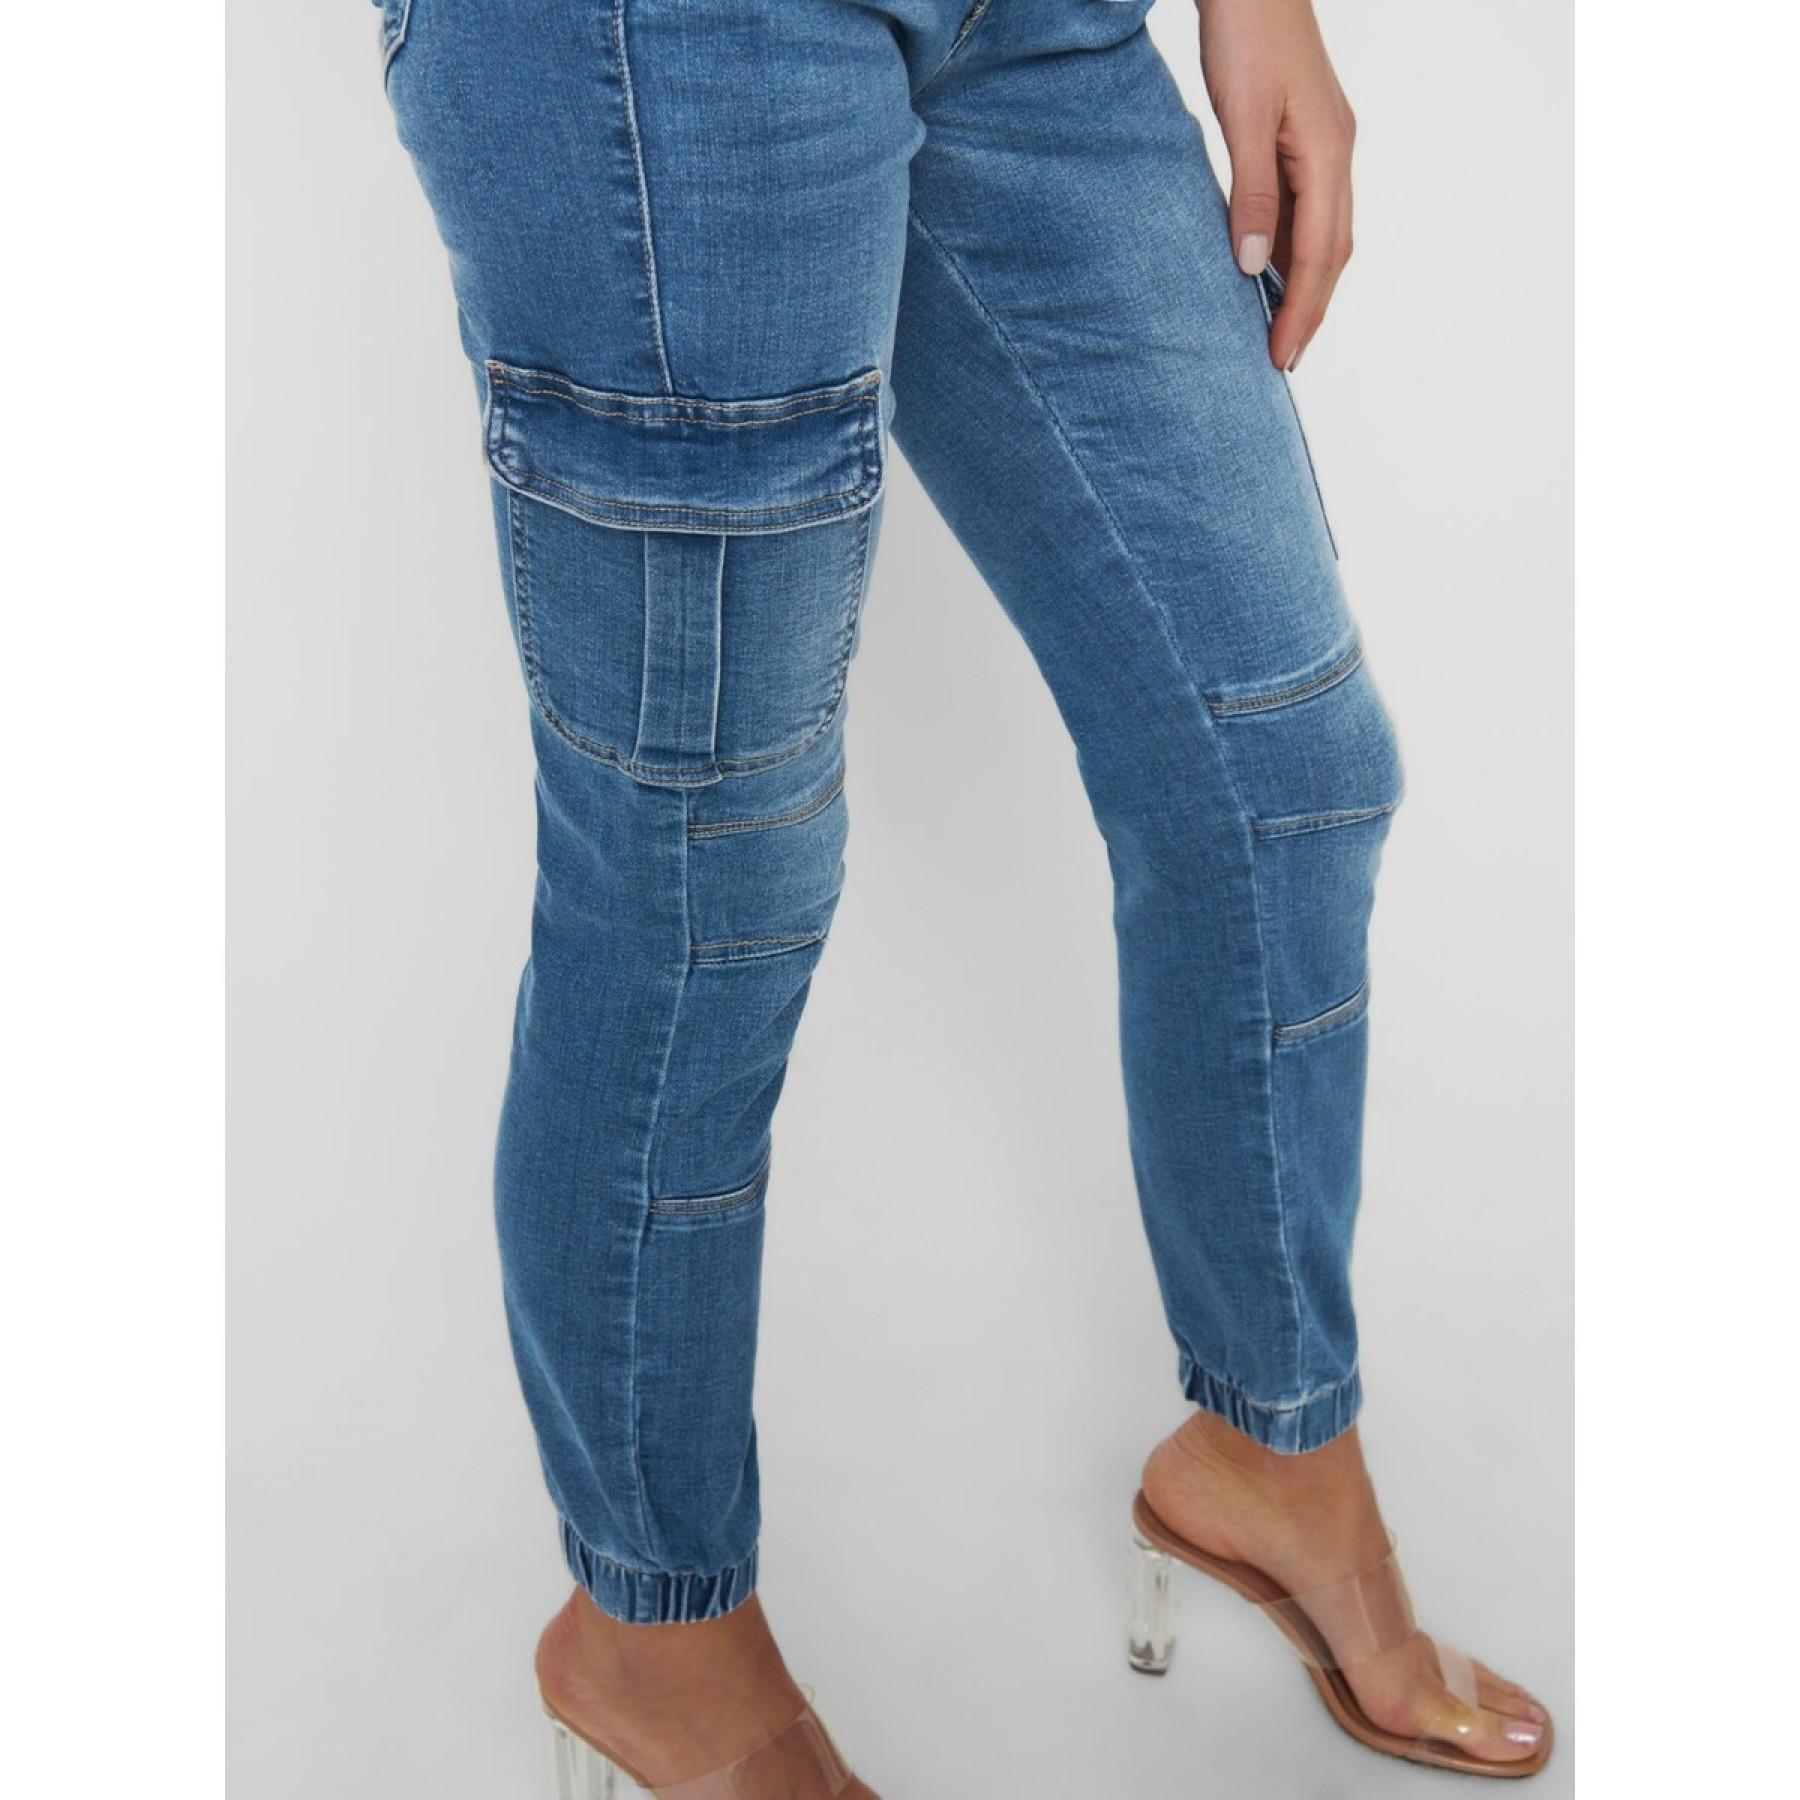 Women's cargo jeans Only Missouri life